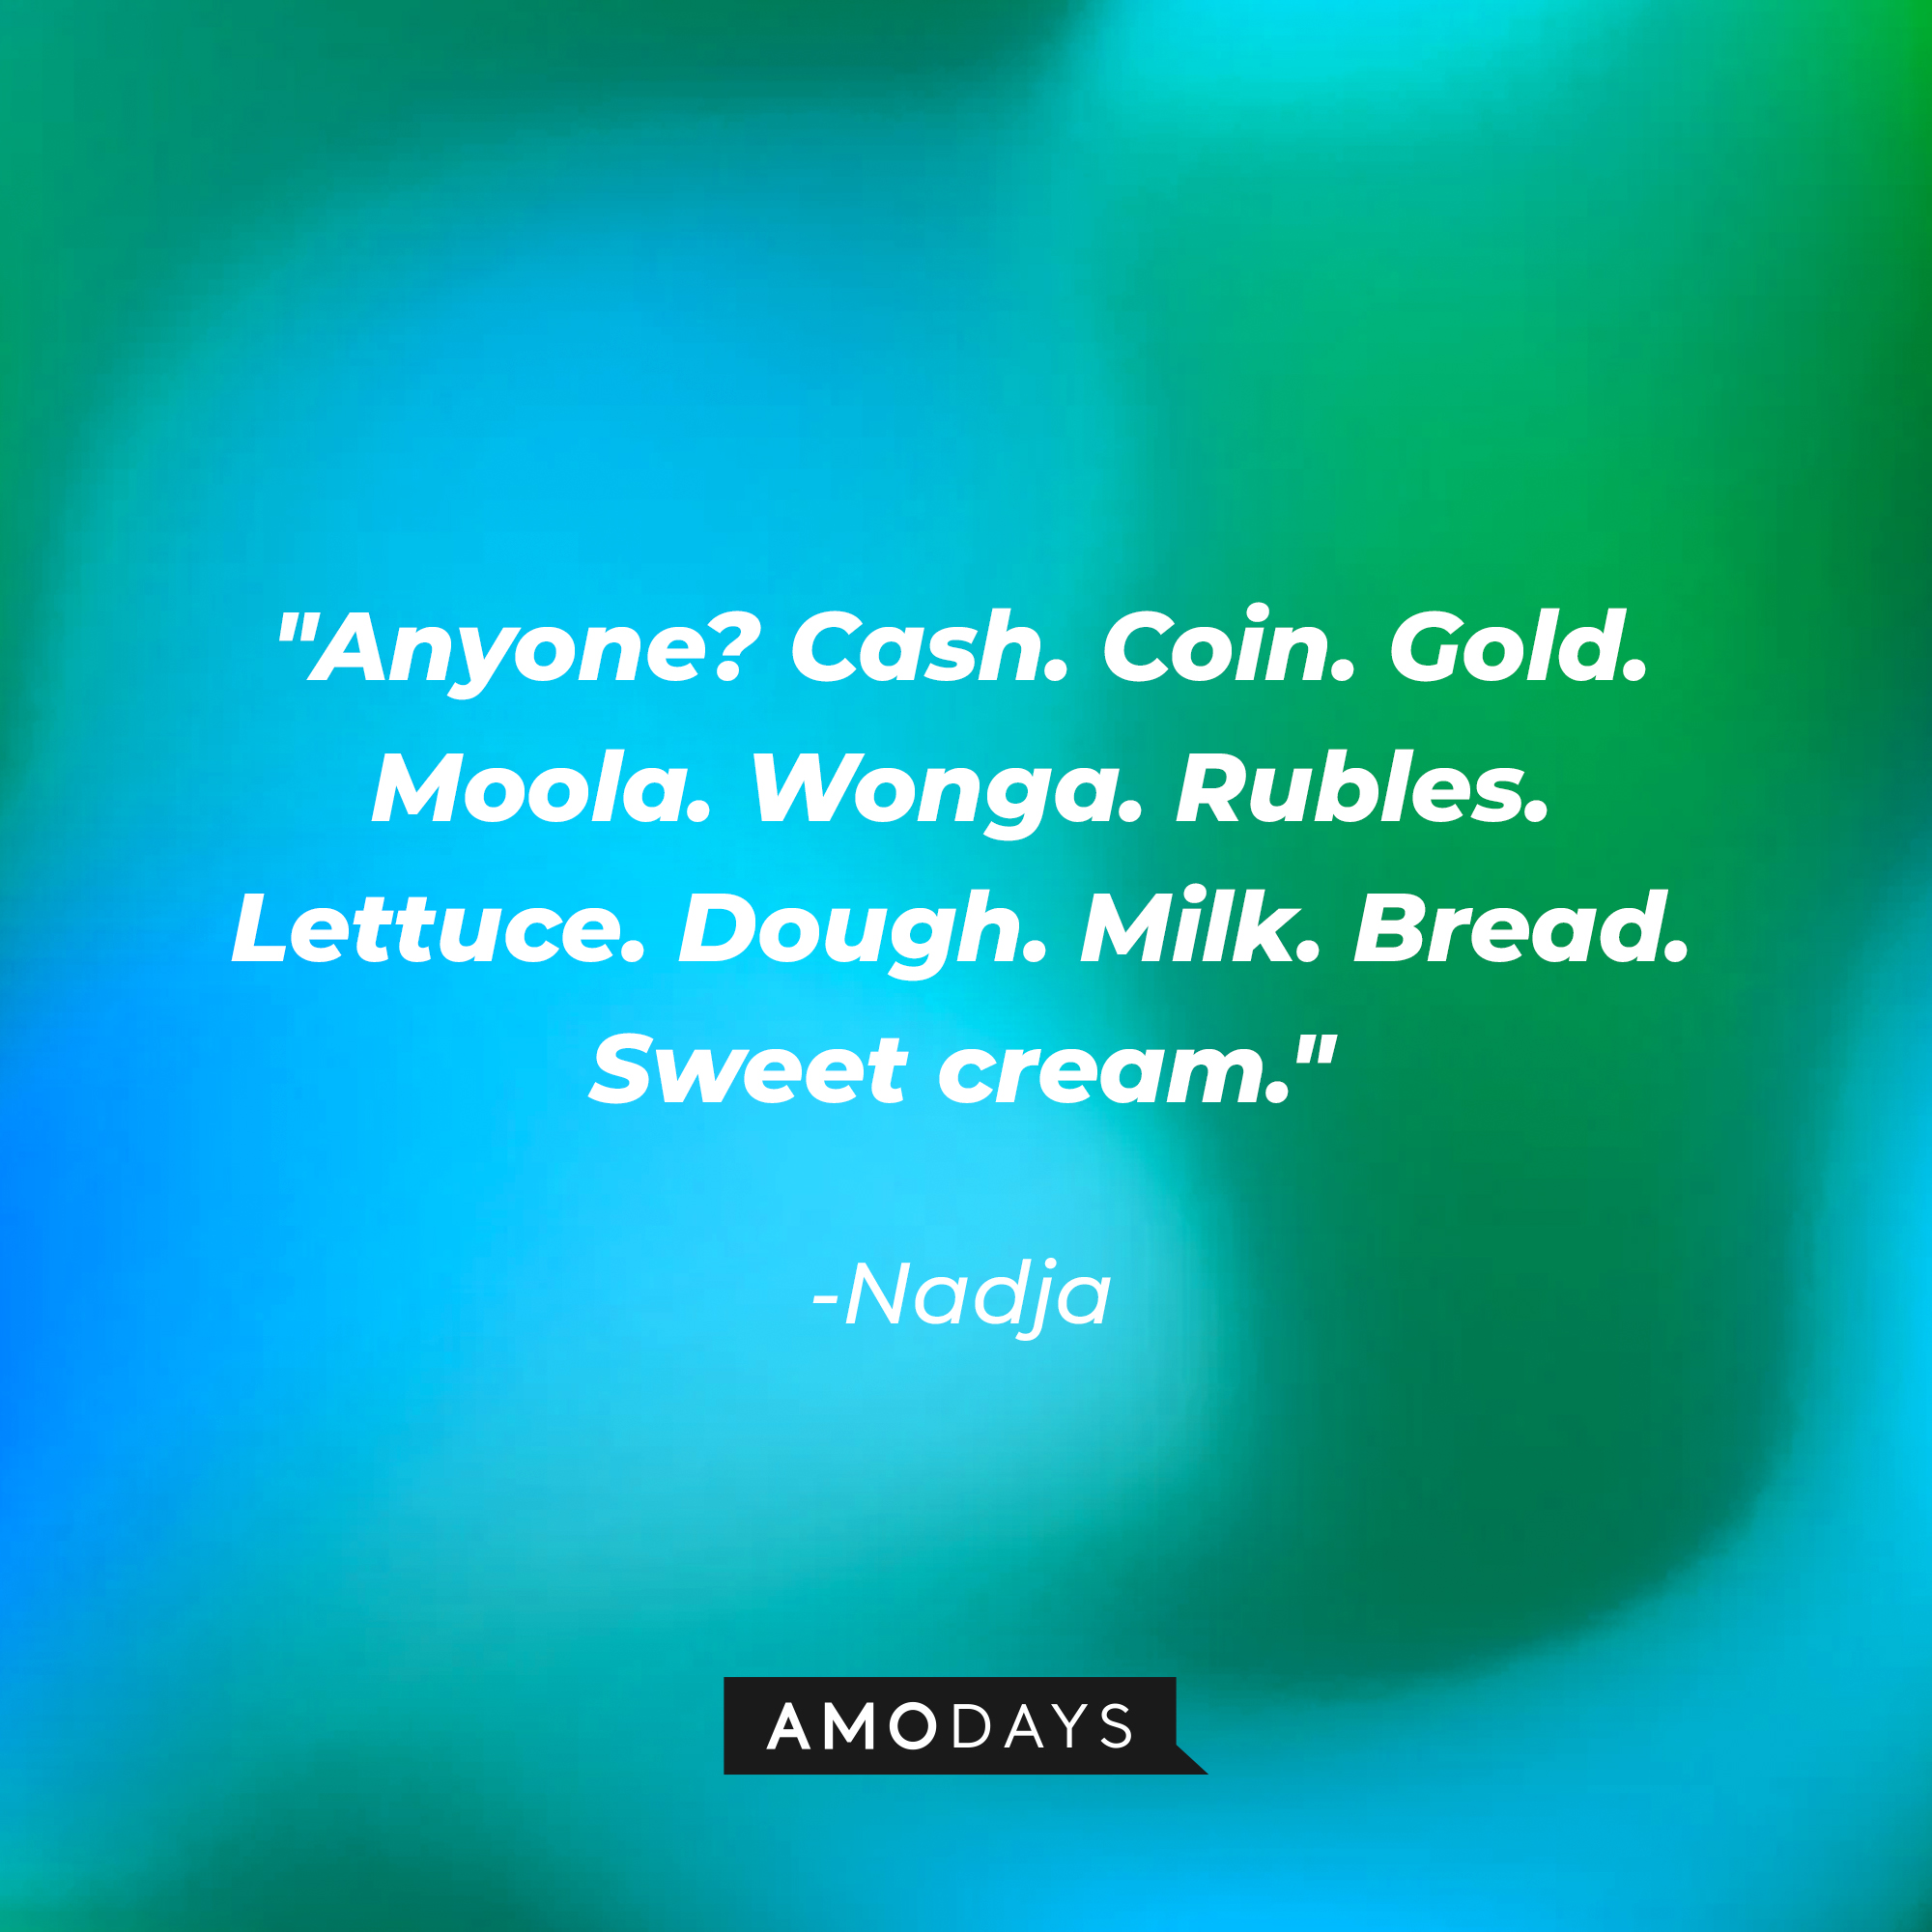 Nadja’s quote: "Anyone? Cash. Coin. Gold. Moola. Wonga. Rubles. Lettuce. Dough. Milk. Bread. Sweet cream." | Source: Amodays